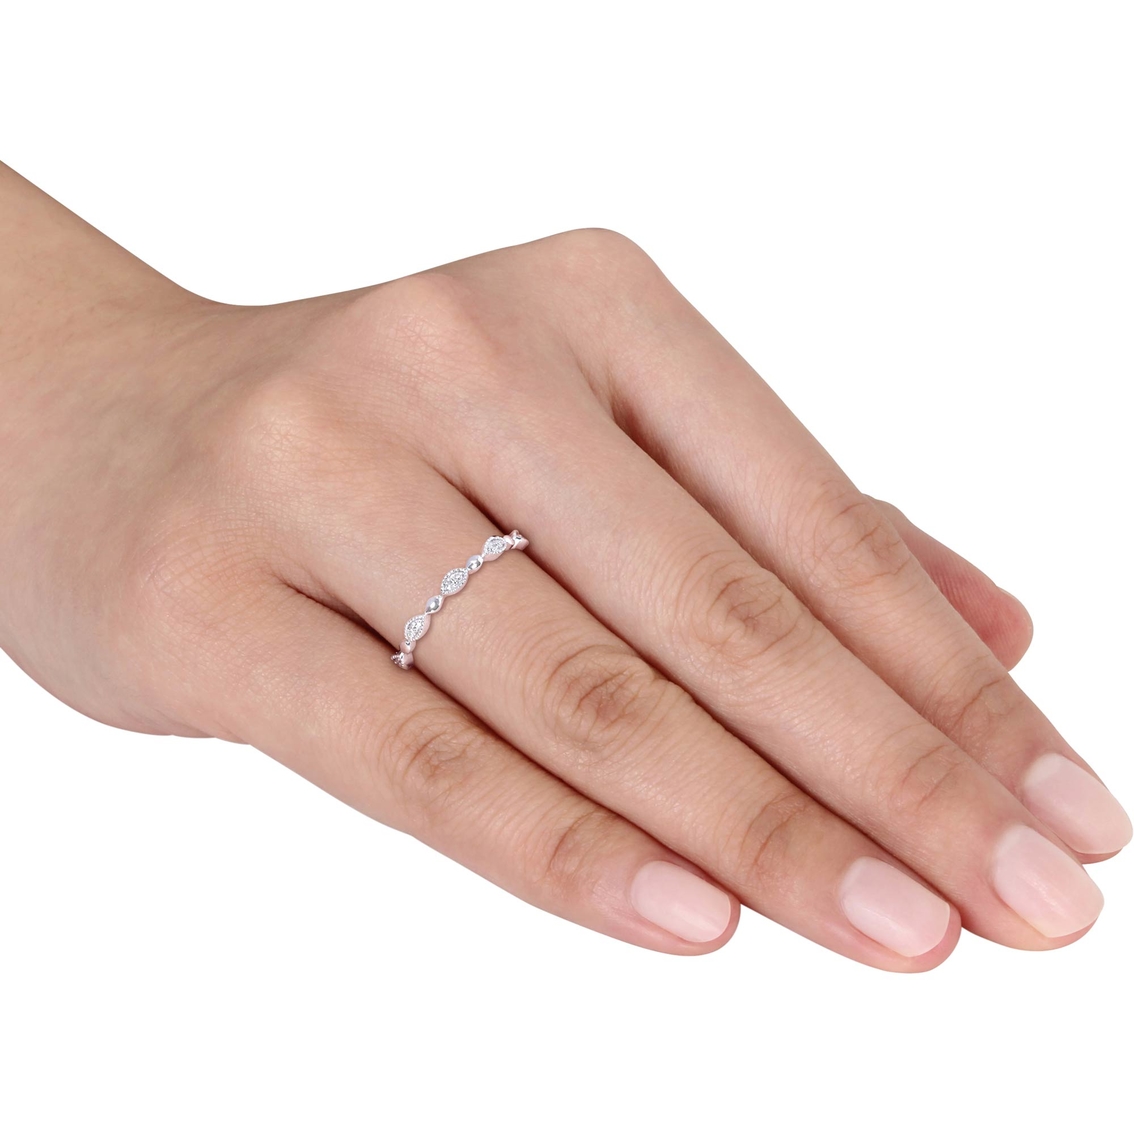 1/10 CT TW Diamond Eternity Ring in 10k White Gold - Image 4 of 4